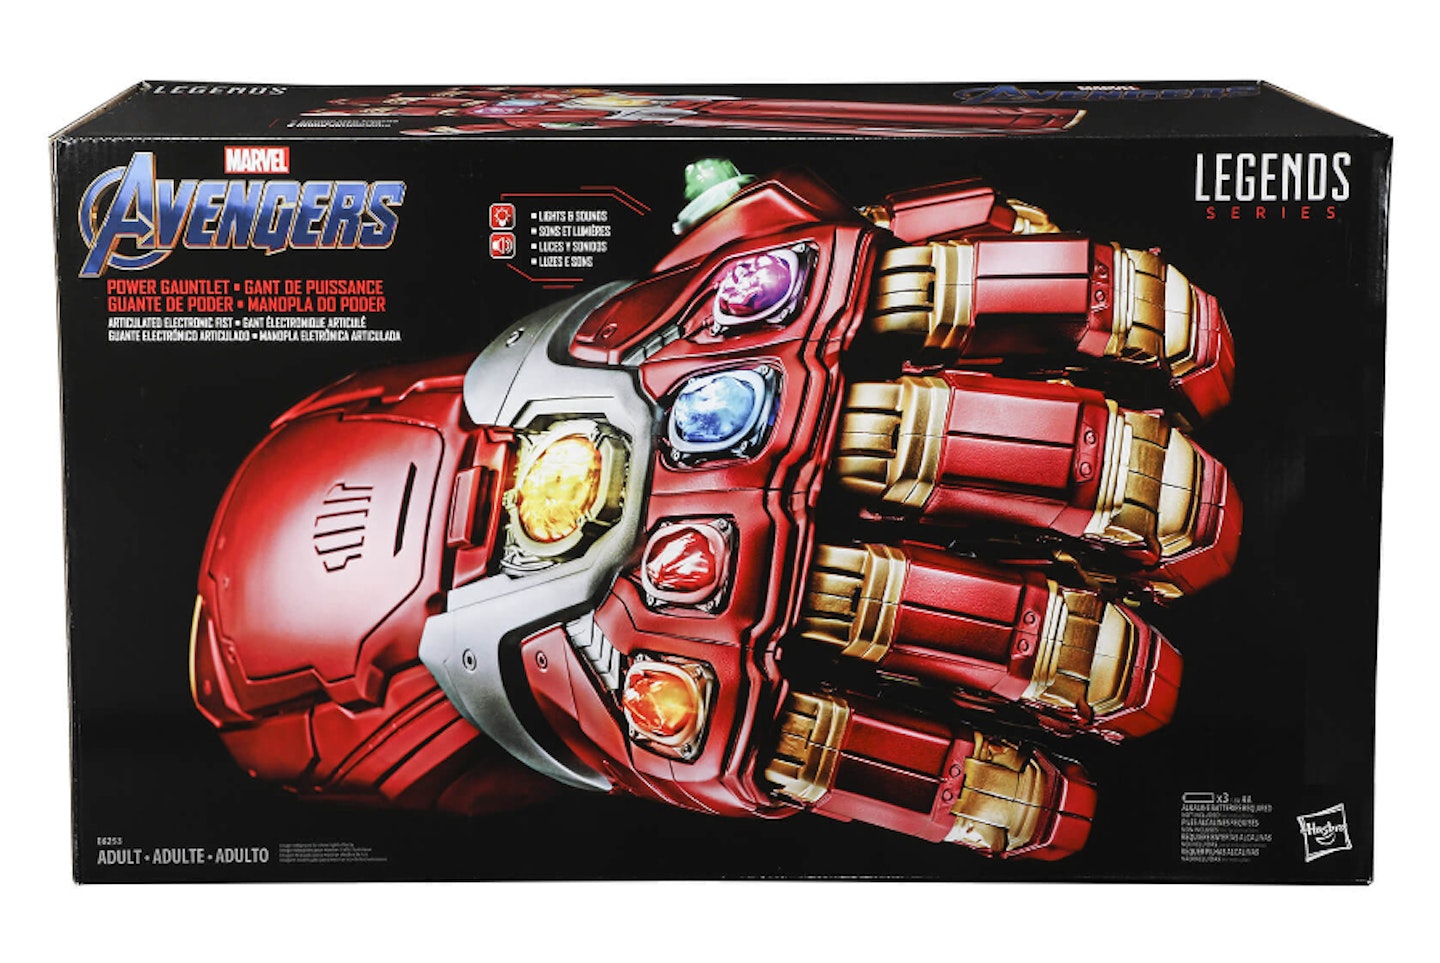 Hasbro Marvel Legends Series Avengers: Endgame Power Gauntlet Articulated Electronic Fist